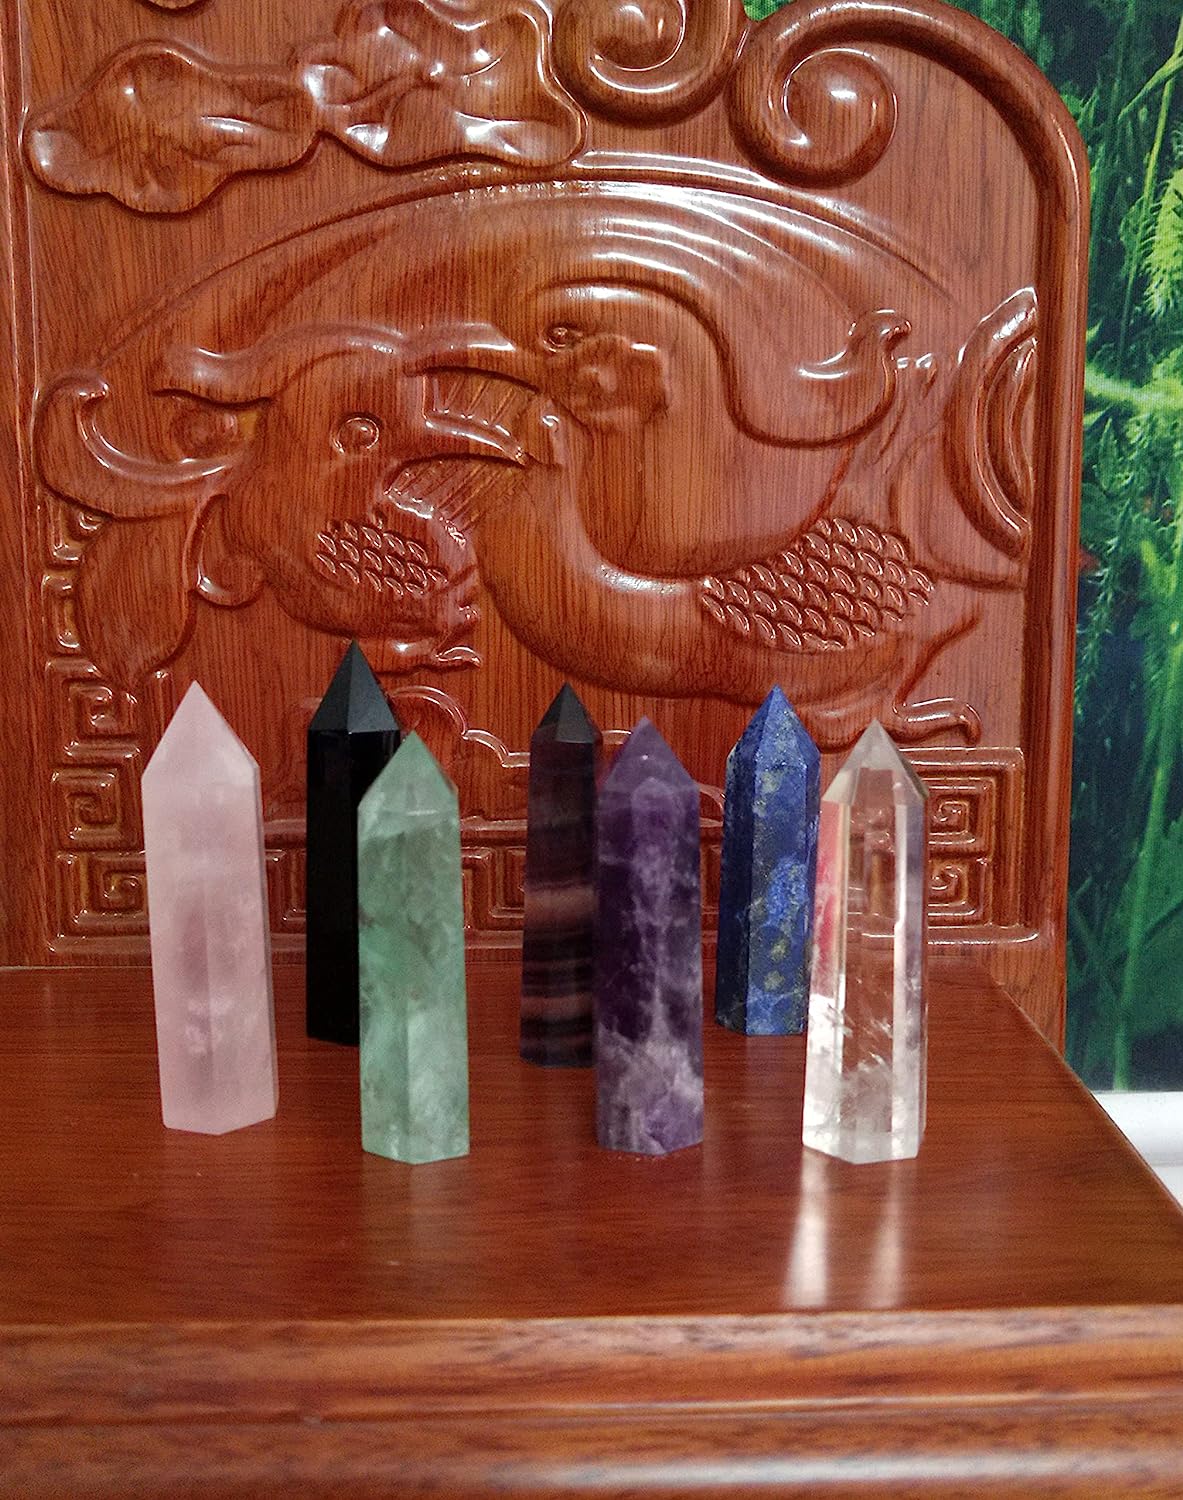 Reikistal Healing Crystal Wands